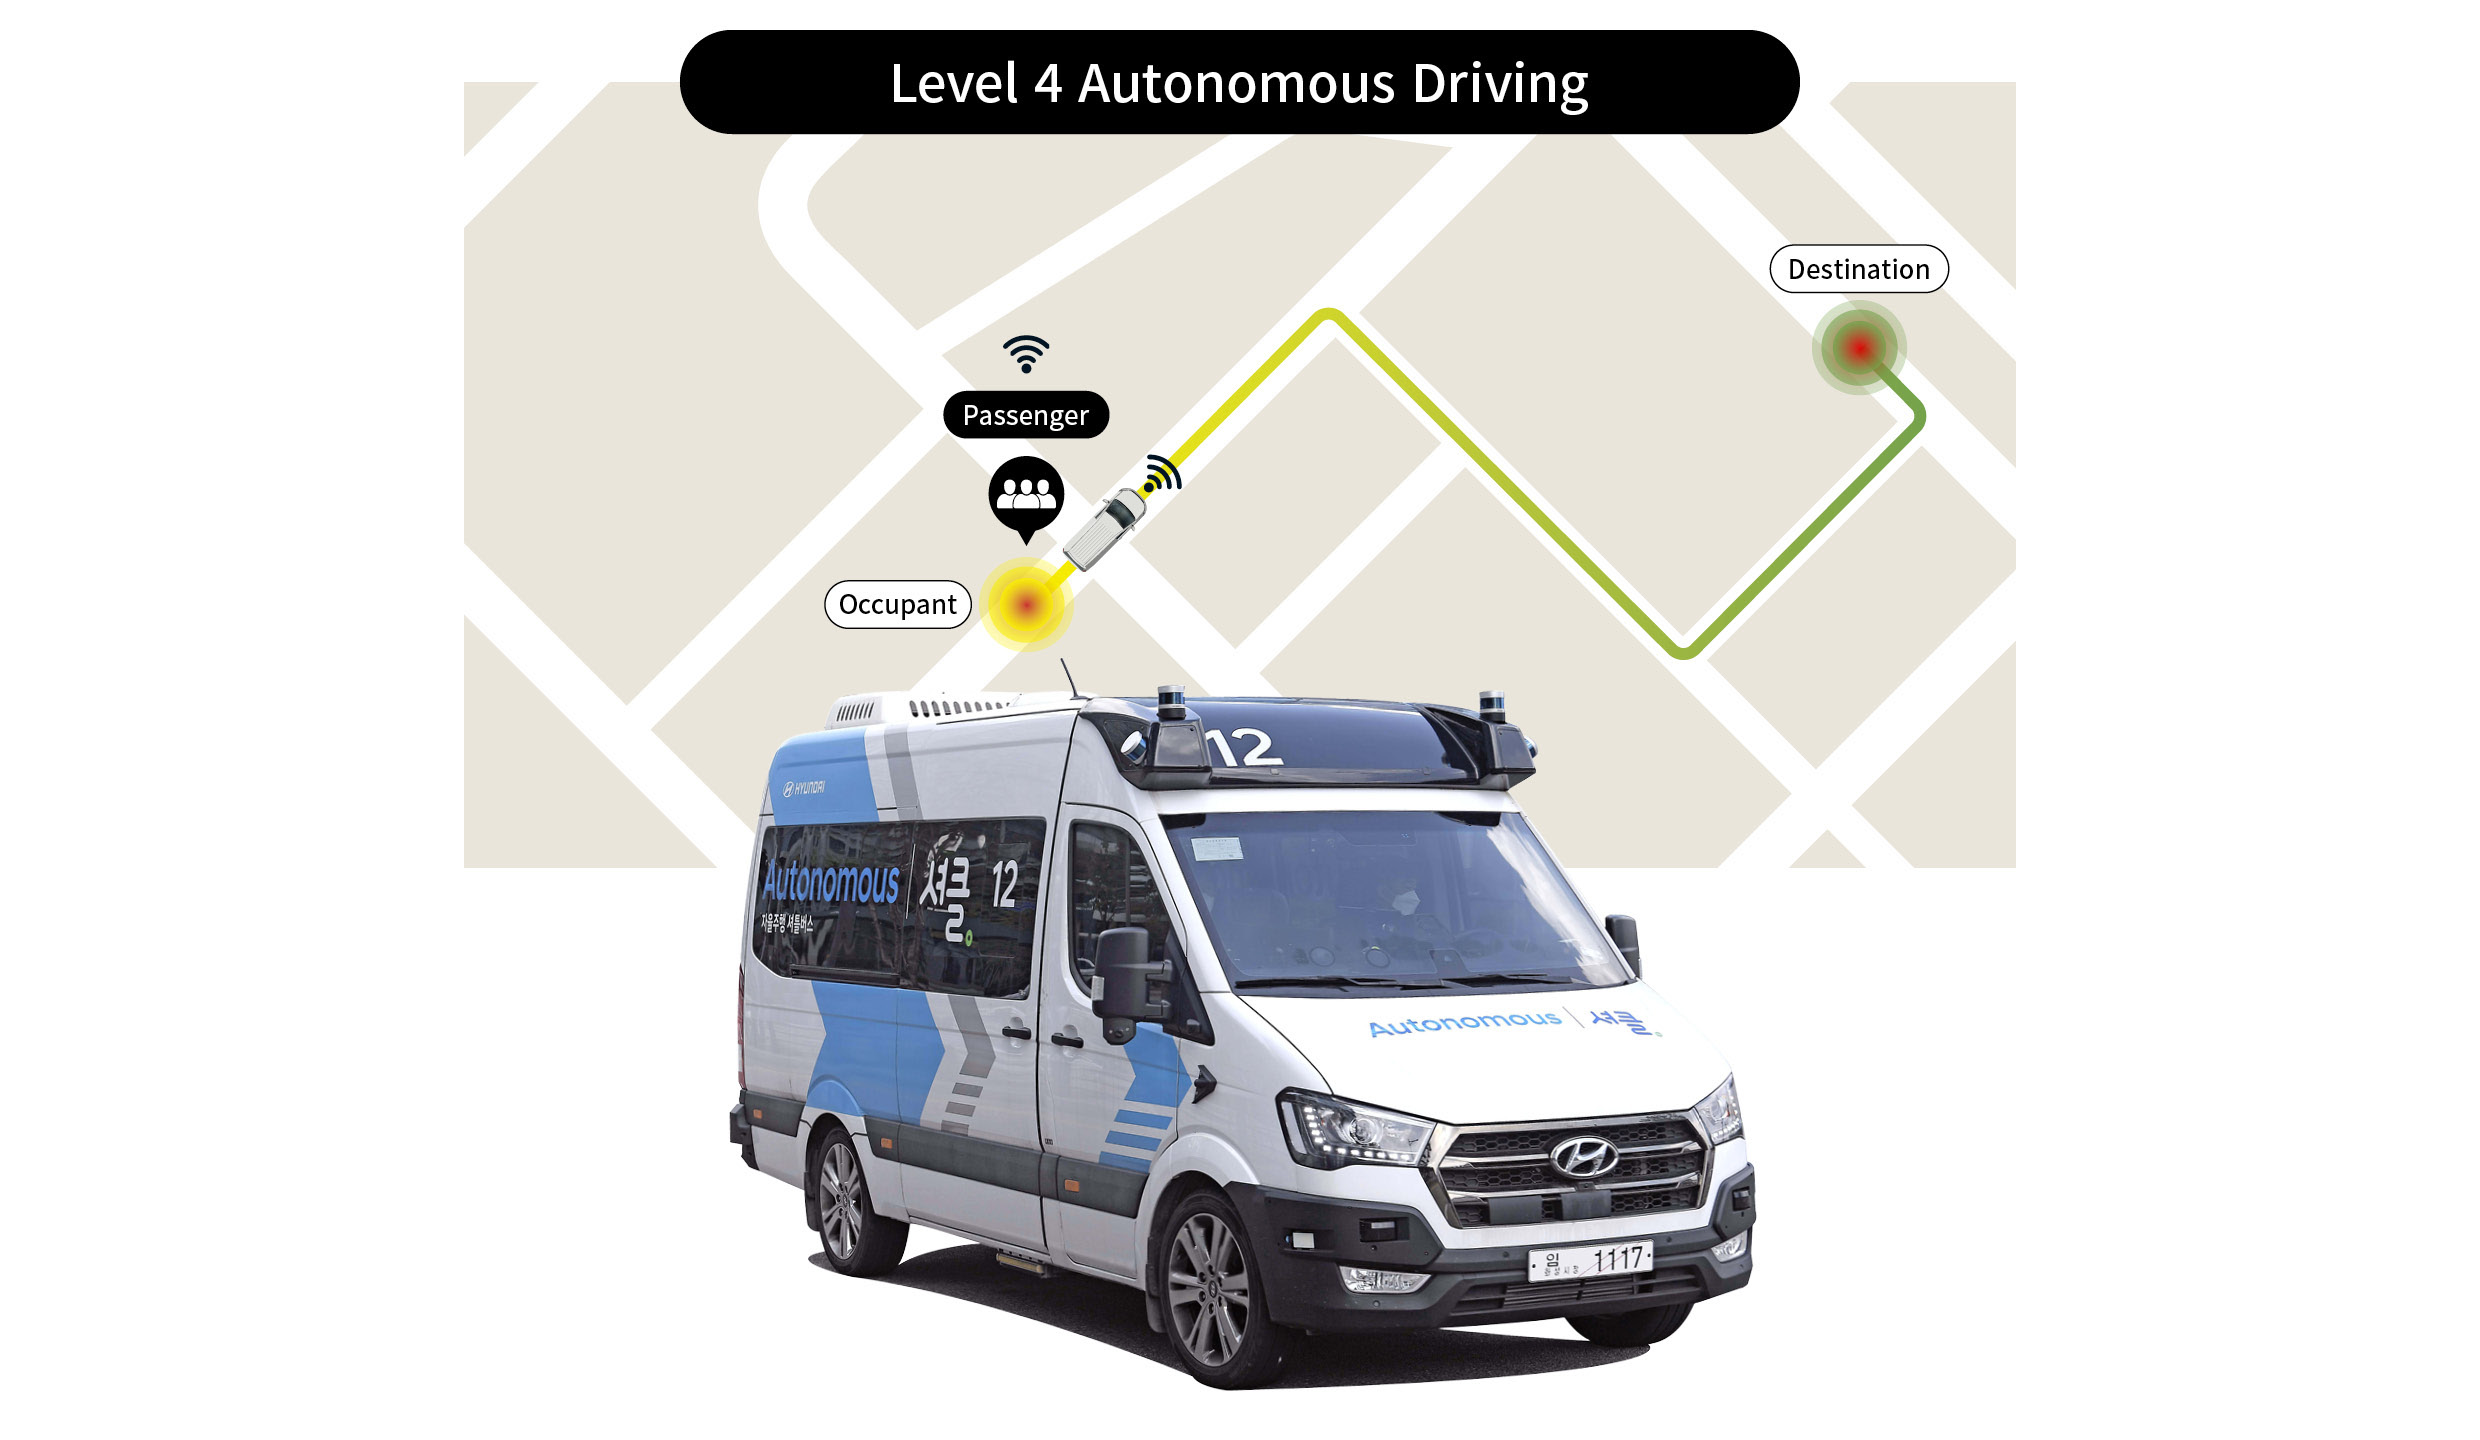 Infographic showing the concept of autonomous driving